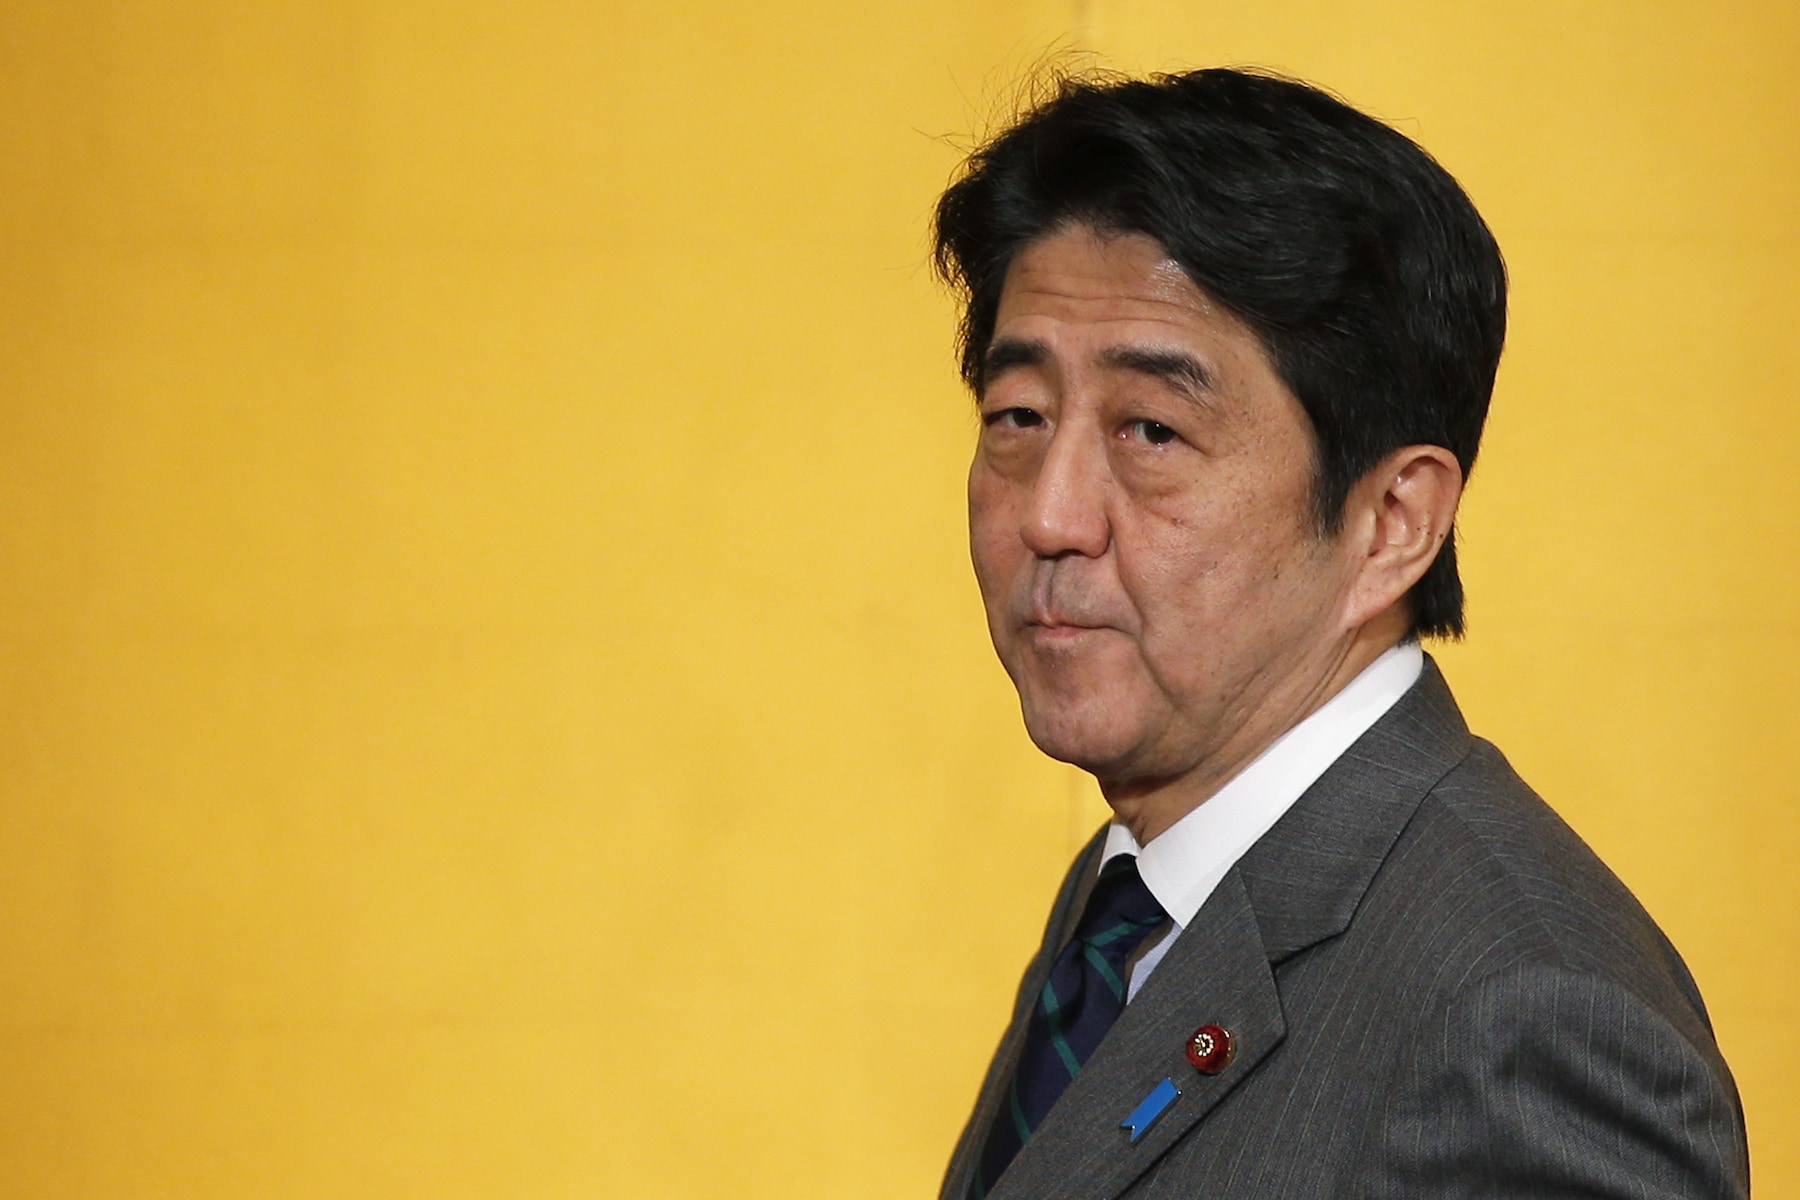 The career of Shinzo Abe, assassinated former Japan prime minister, in photo Washington Post